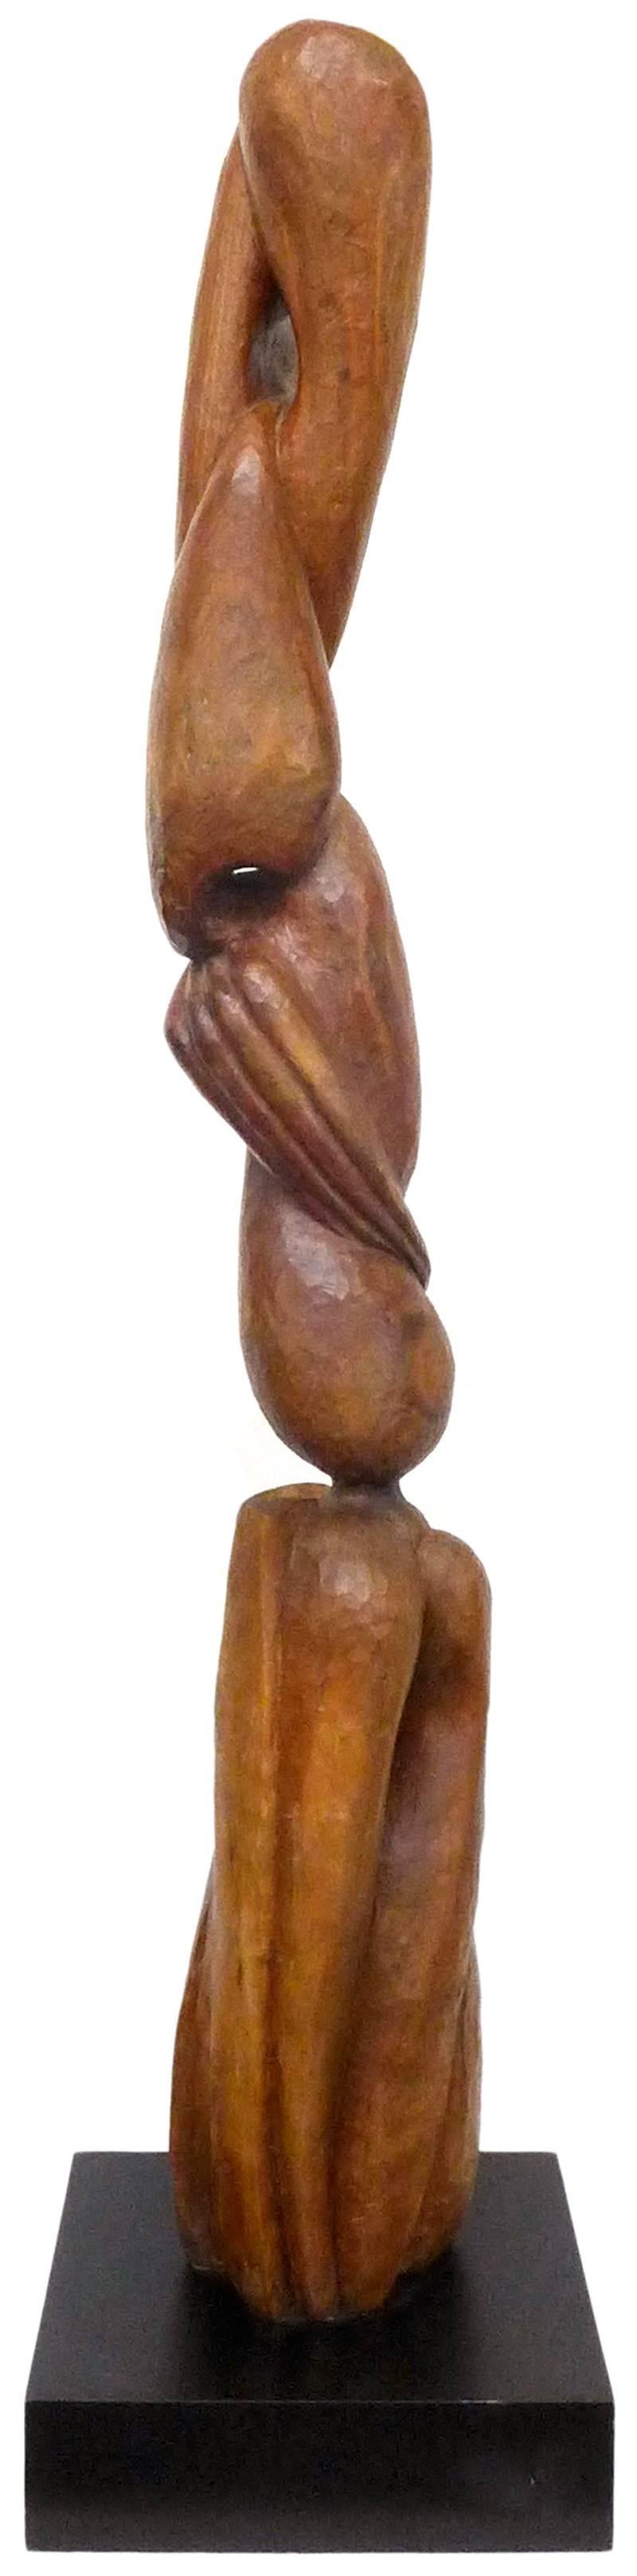 wood sculpture for sale